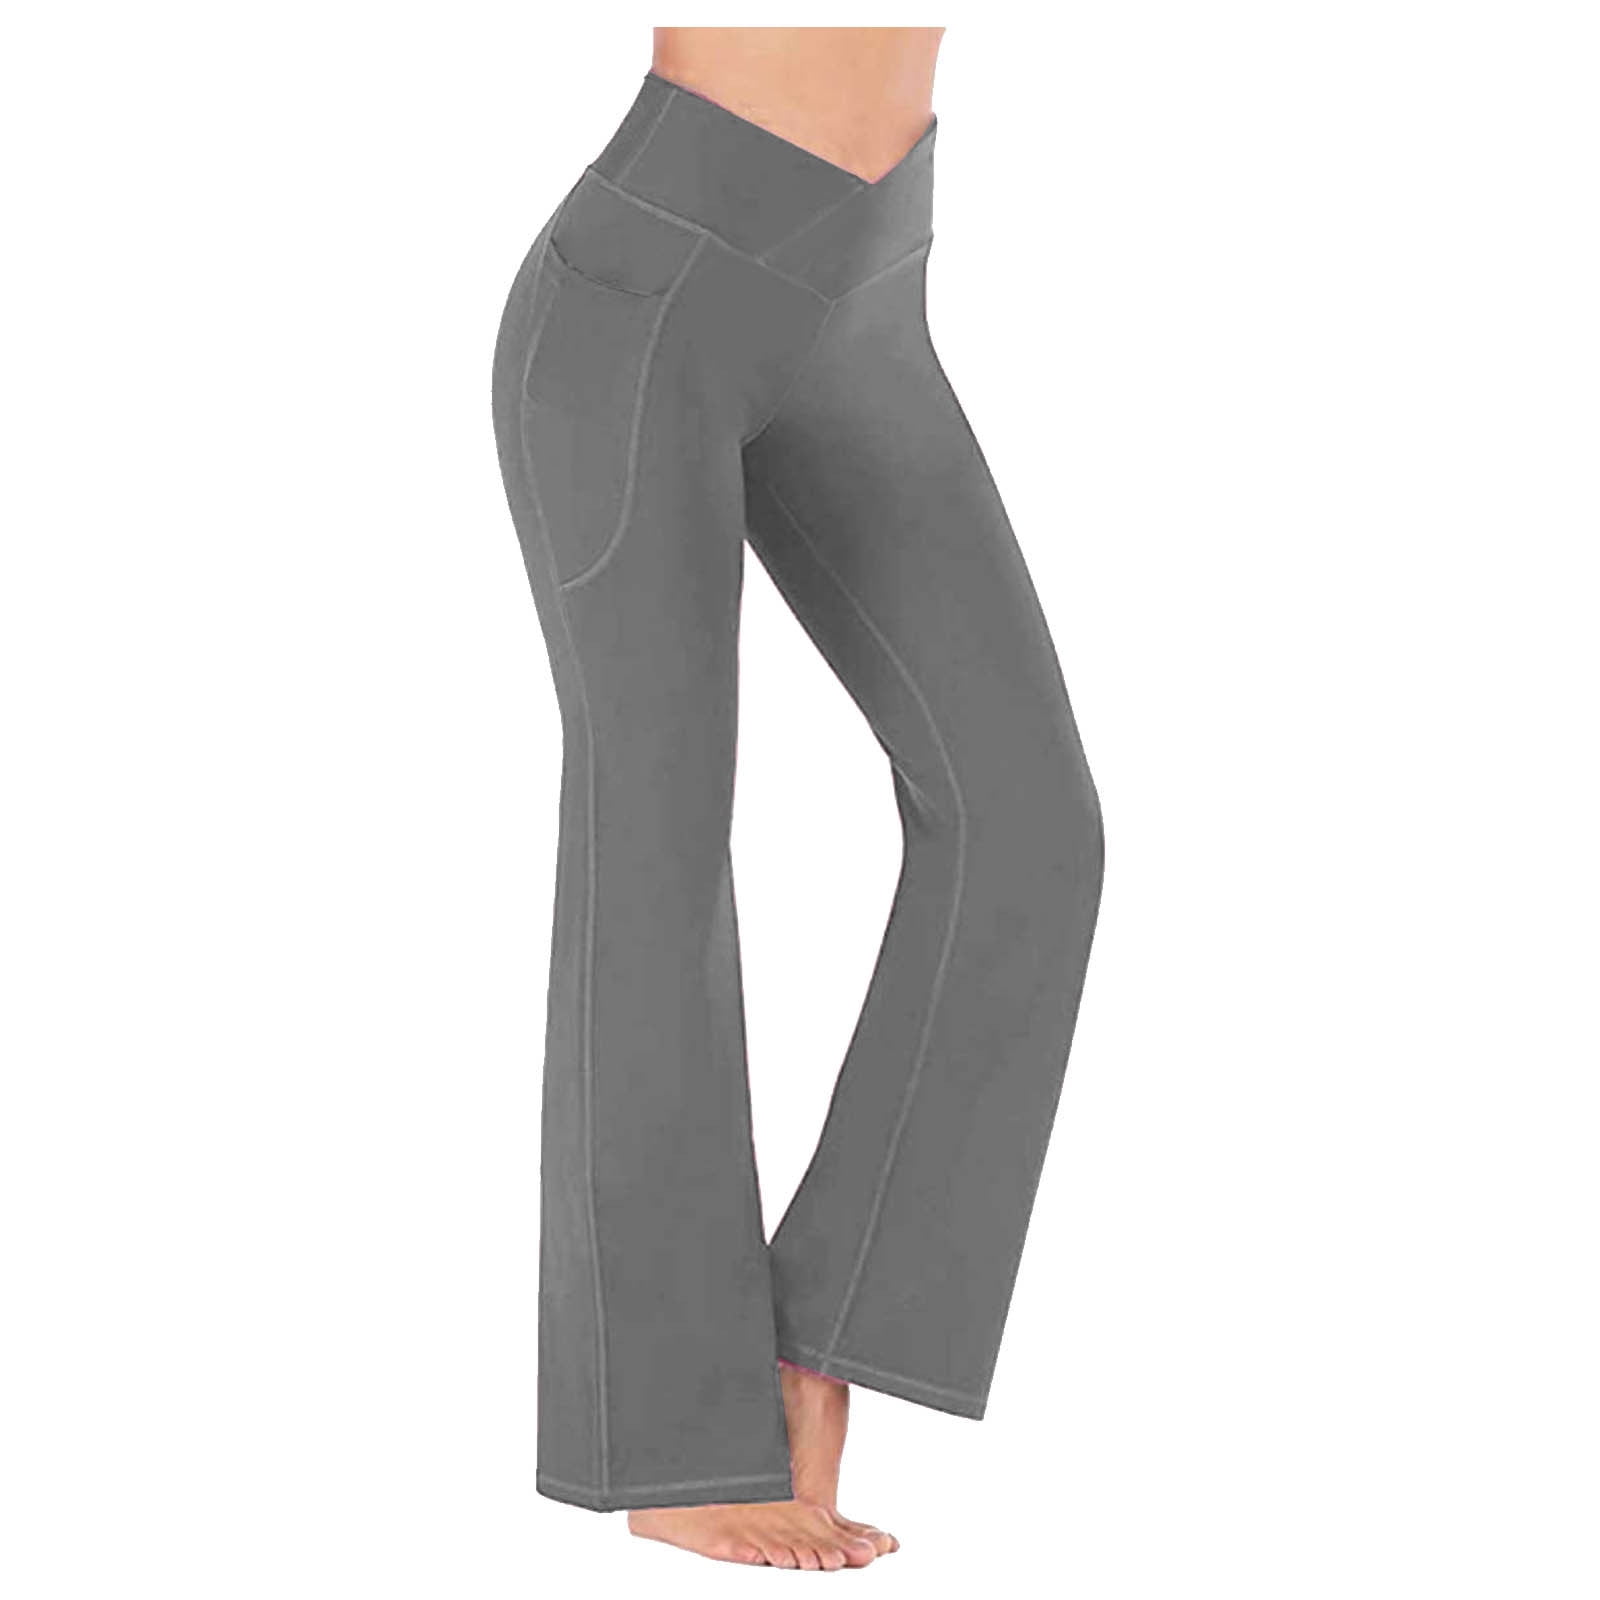 AFITNE Yoga Pants For Women Bootcut Pants